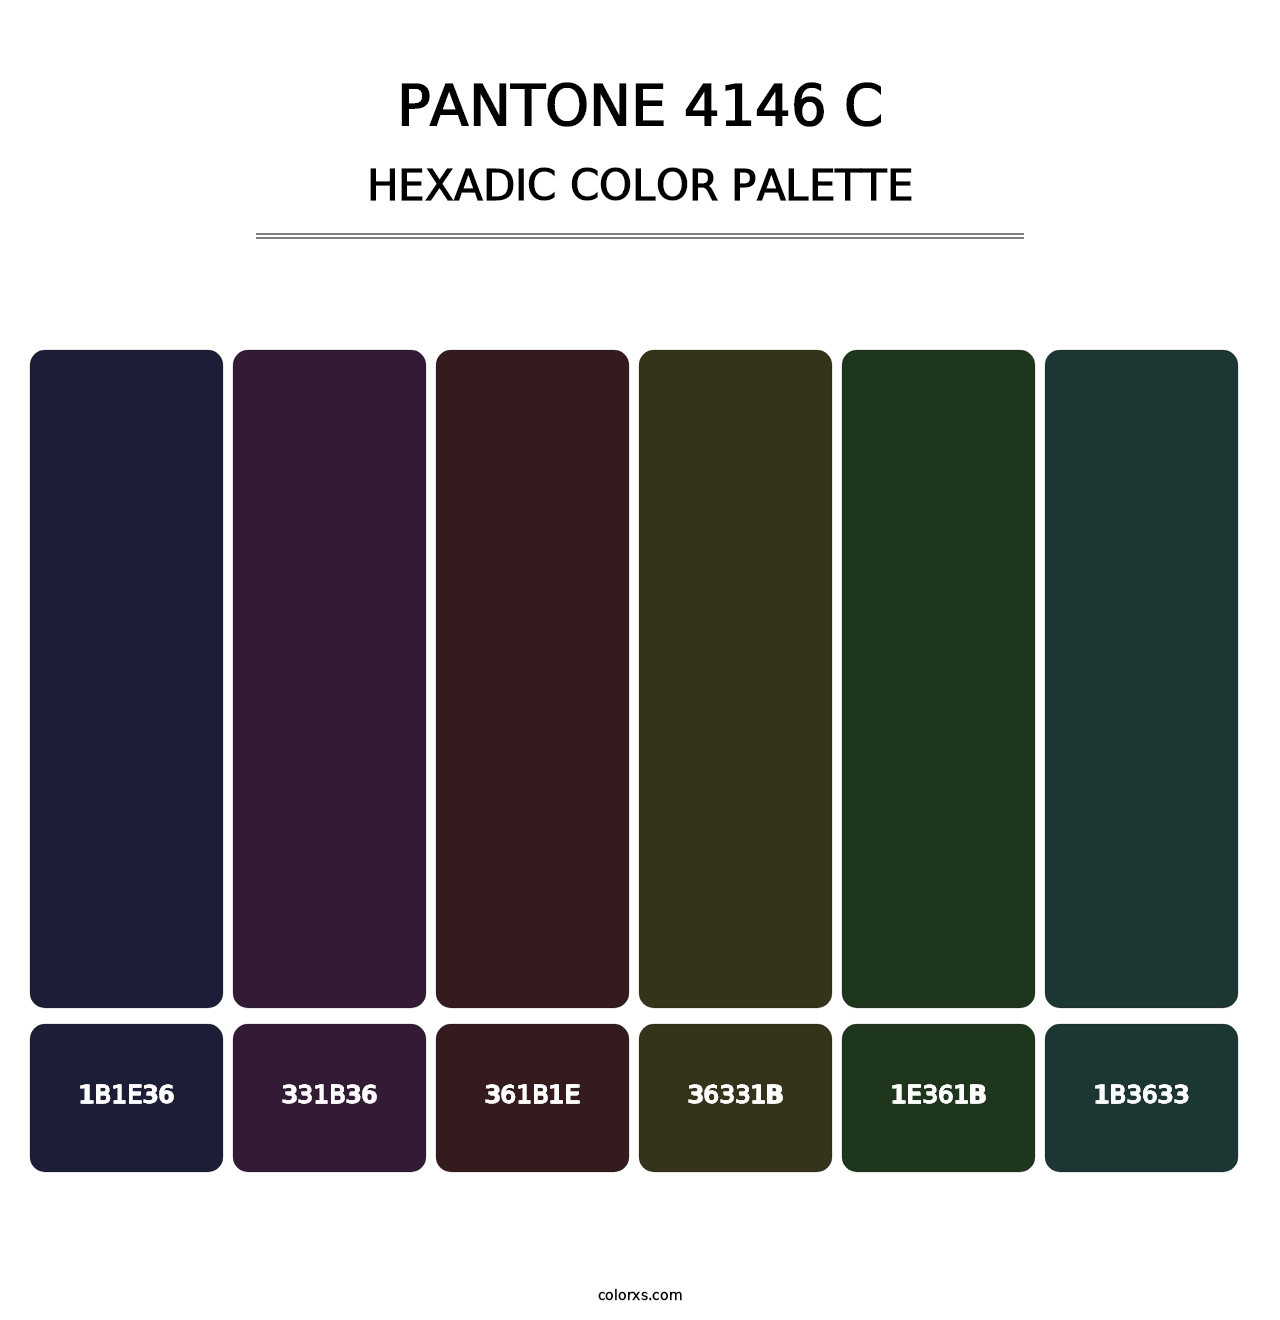 PANTONE 4146 C - Hexadic Color Palette